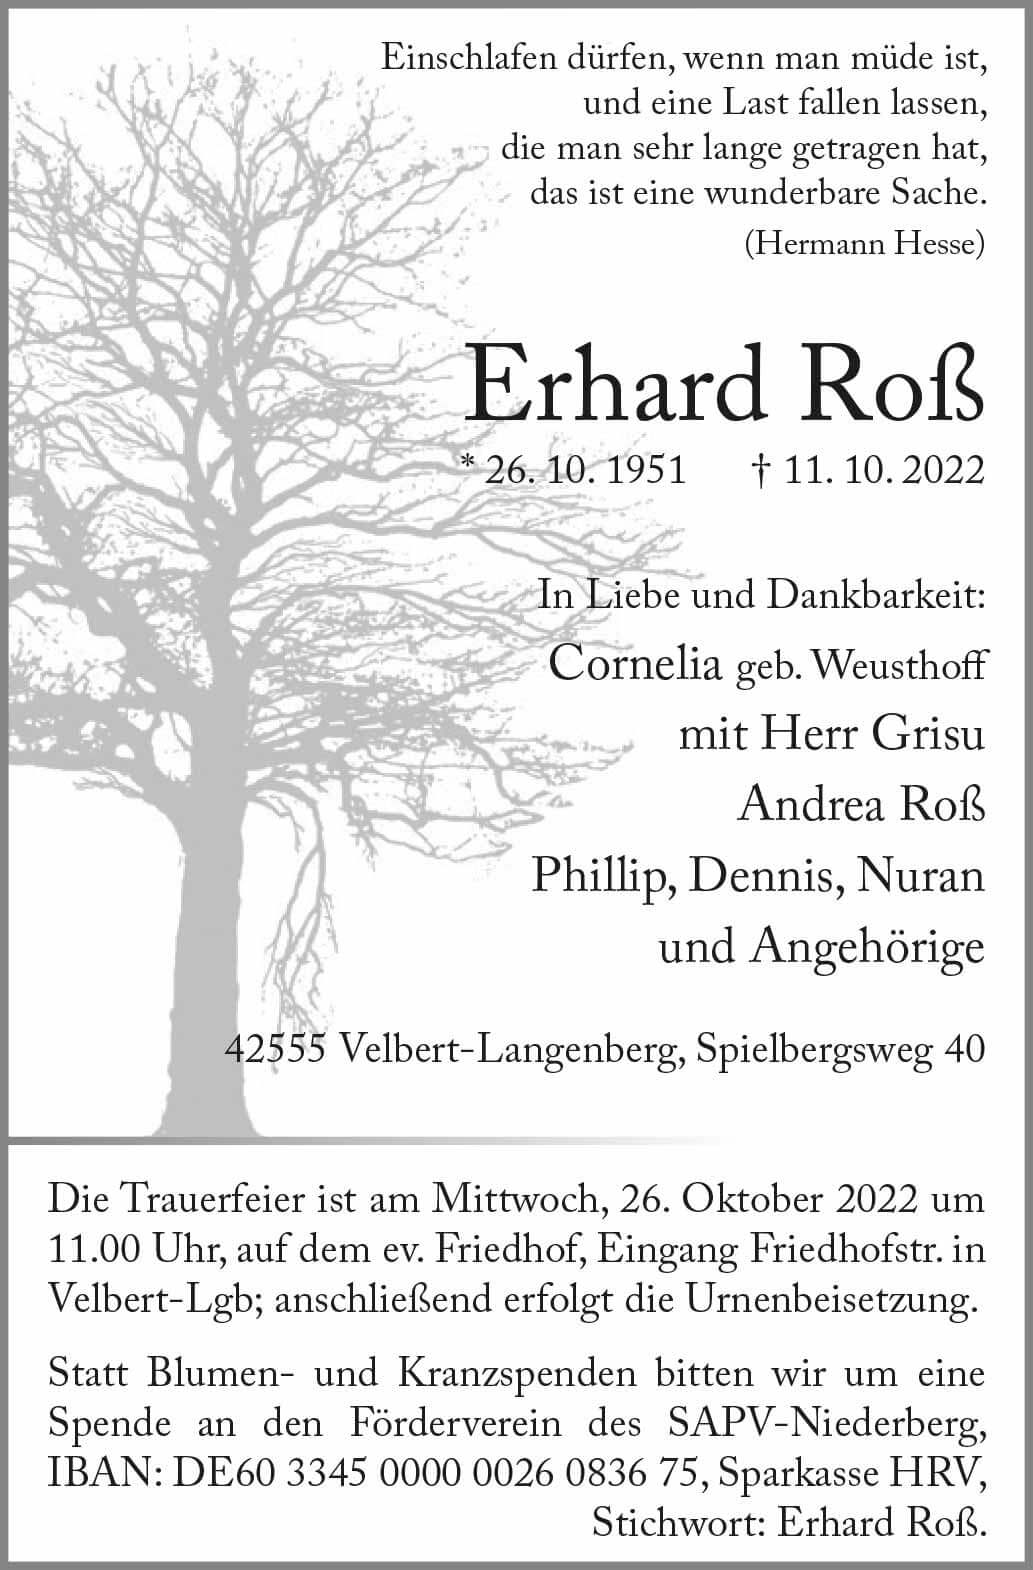 Erhard Roß † 11. 10. 2022